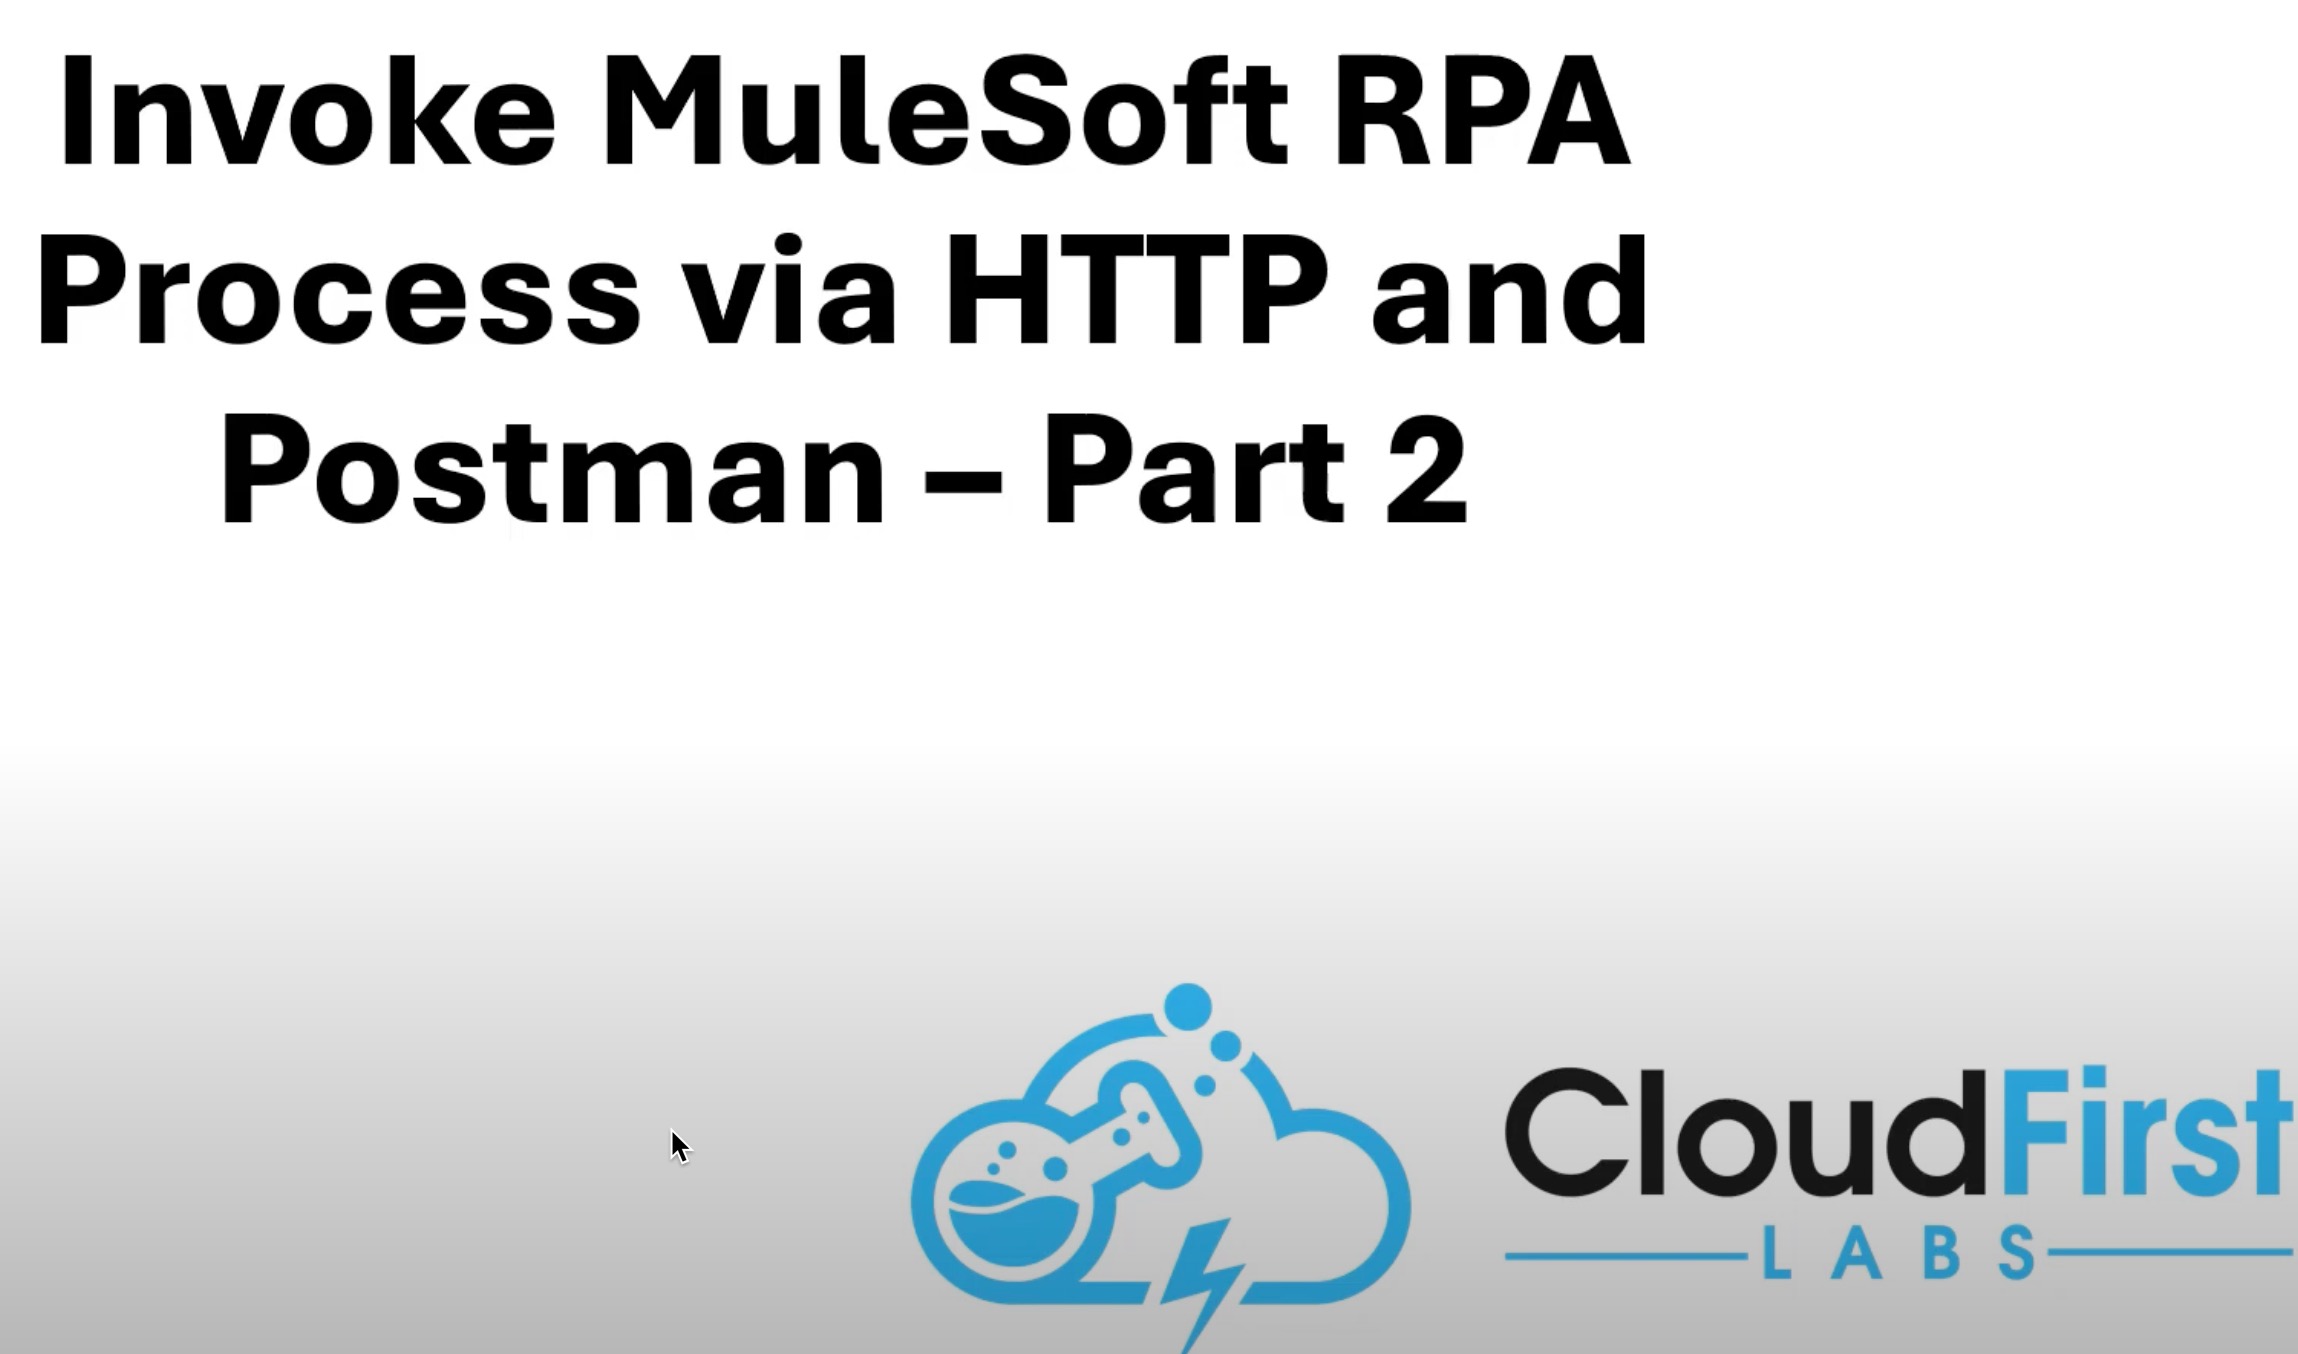 Invoke a MuleSoft RPA Process via HTTP and Postman – Part 2